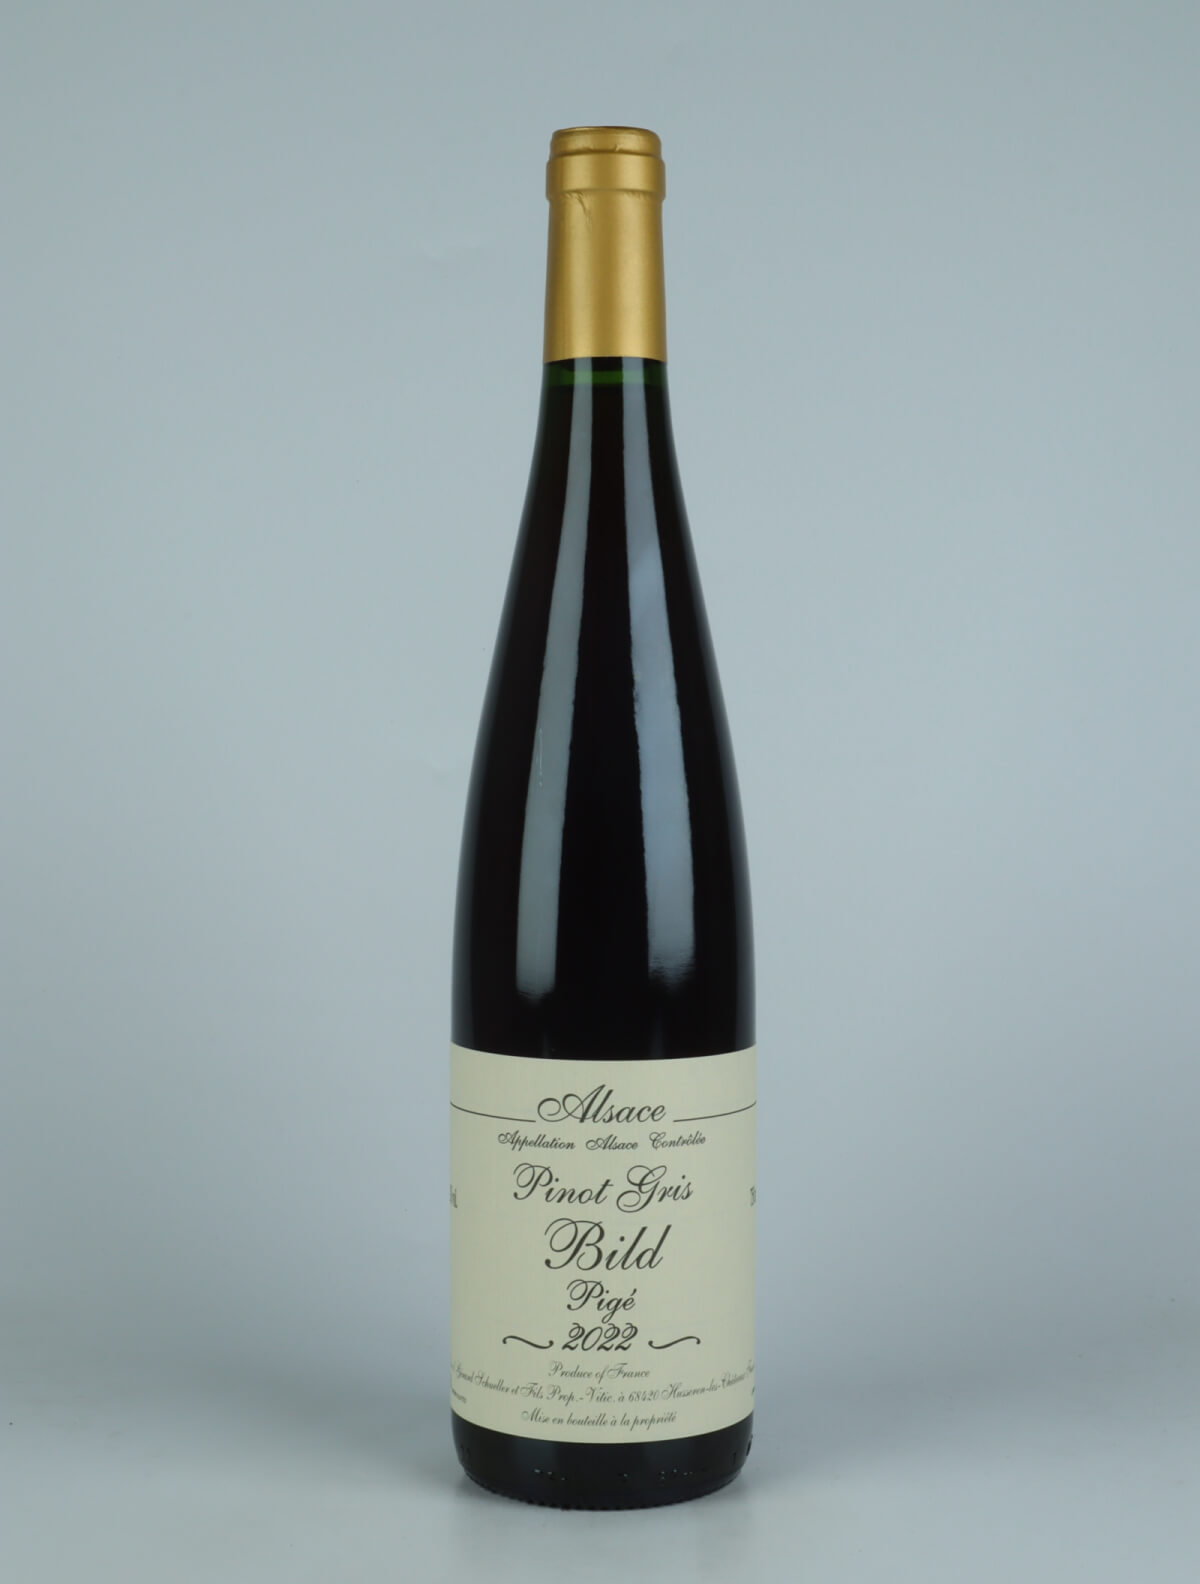 A bottle 2022 Pinot Gris Bild Pigé Orange wine from Gérard Schueller, Alsace in France